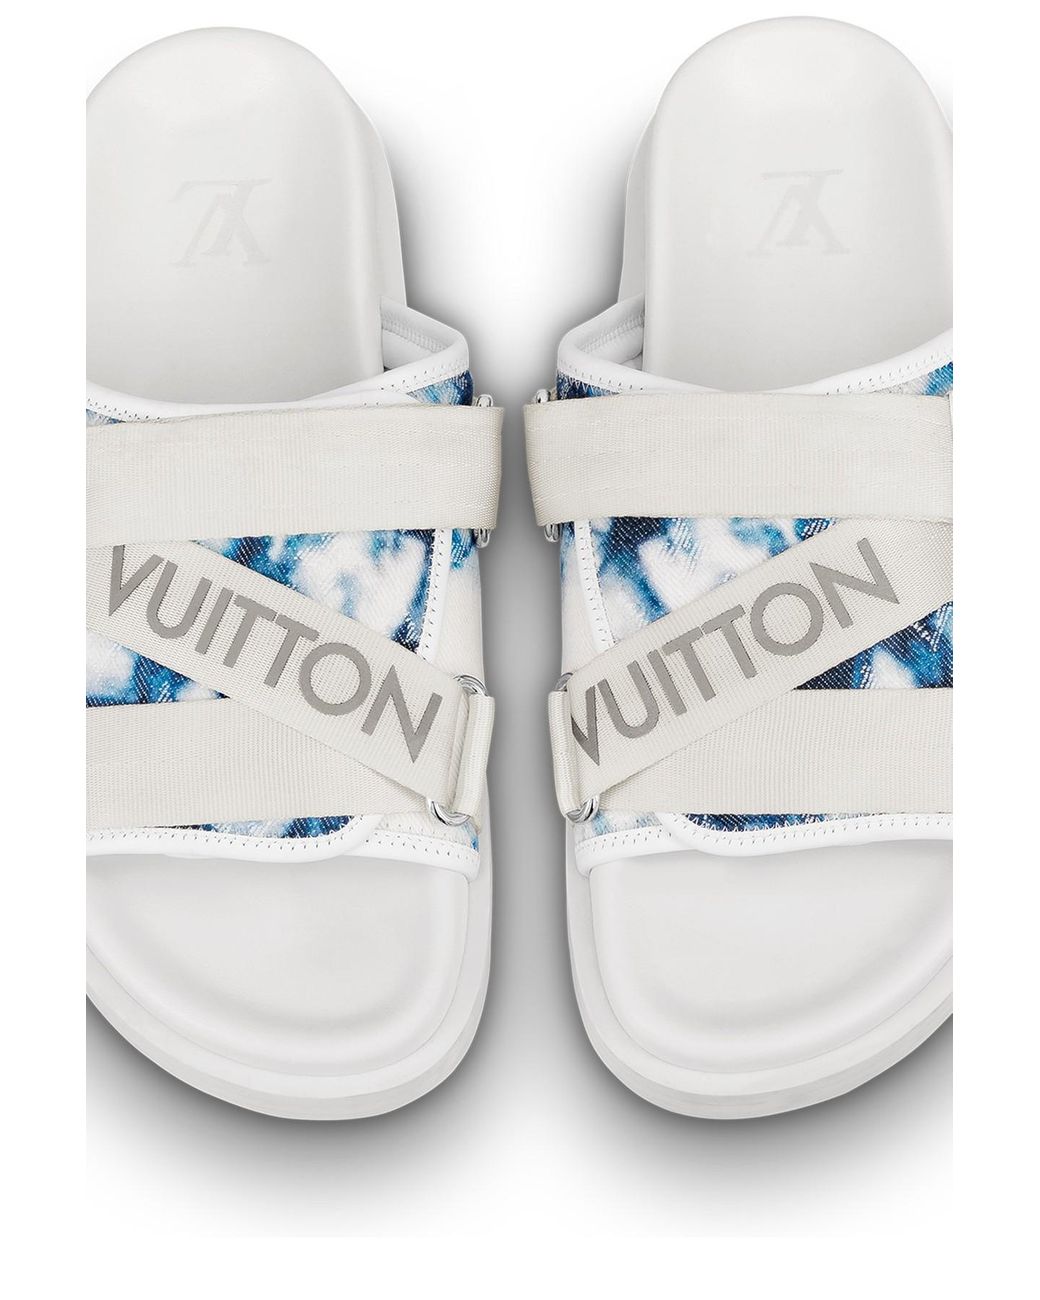 CITY BOY - YOUNGOHM with Louis Vuitton HONOLULU Mule Sandals ราคาอ้างอิงจาก Louis  Vuitton TH Website . Cr. #YOUNGOHM #LouisVuitton . อย่าลืม Like CIT